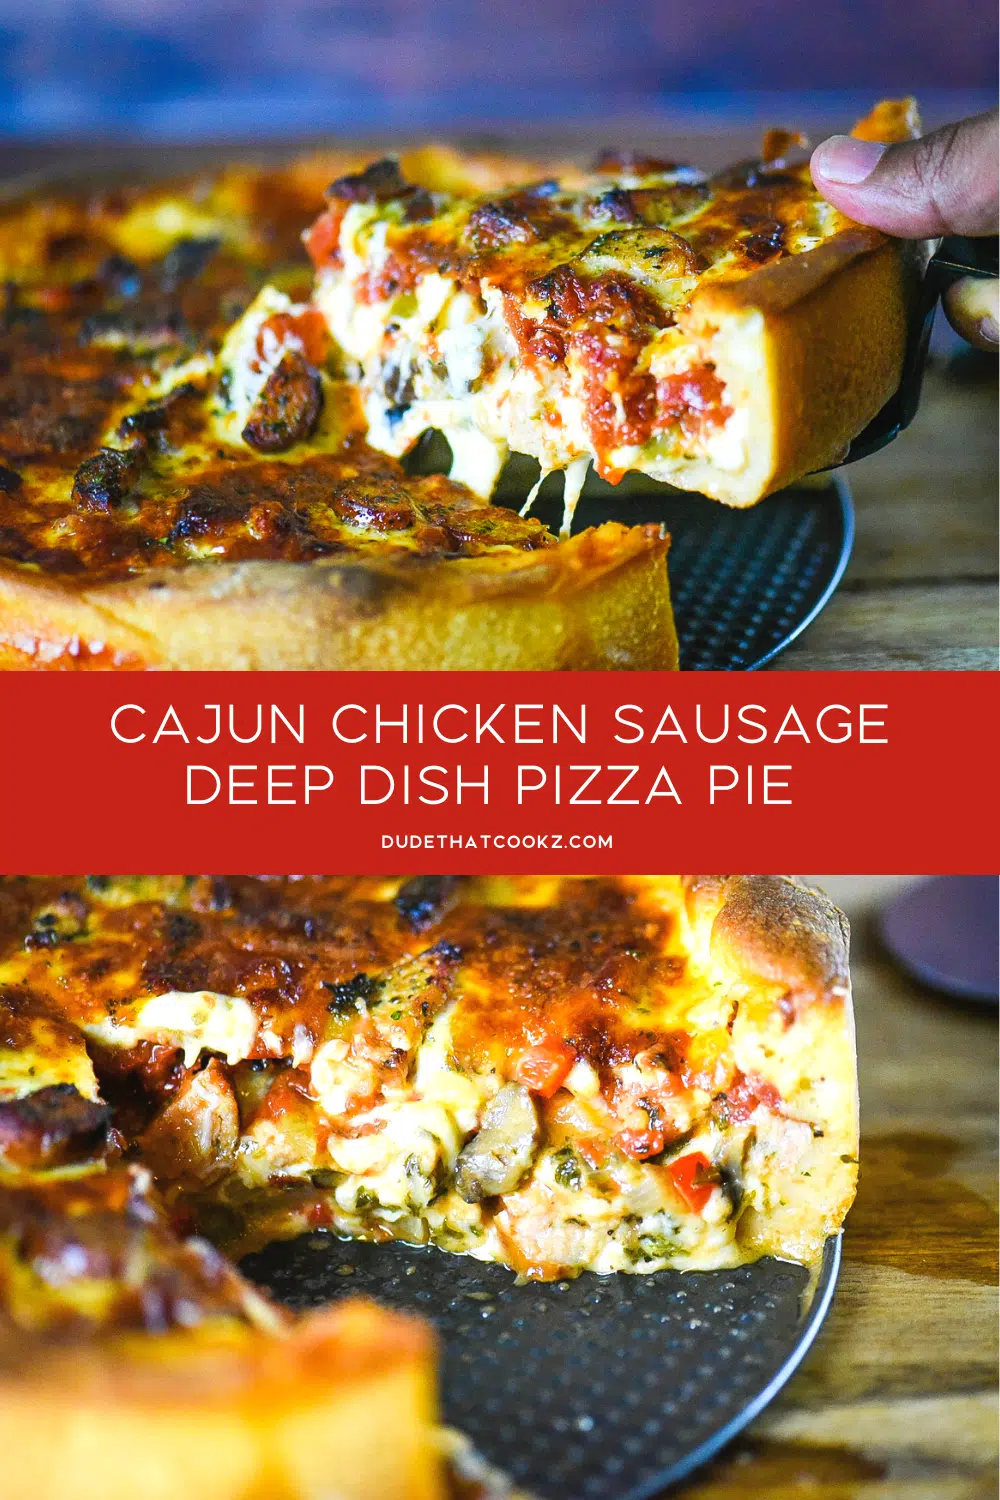 Cajun Chicken Sausage Deep Dish Pizza Pie